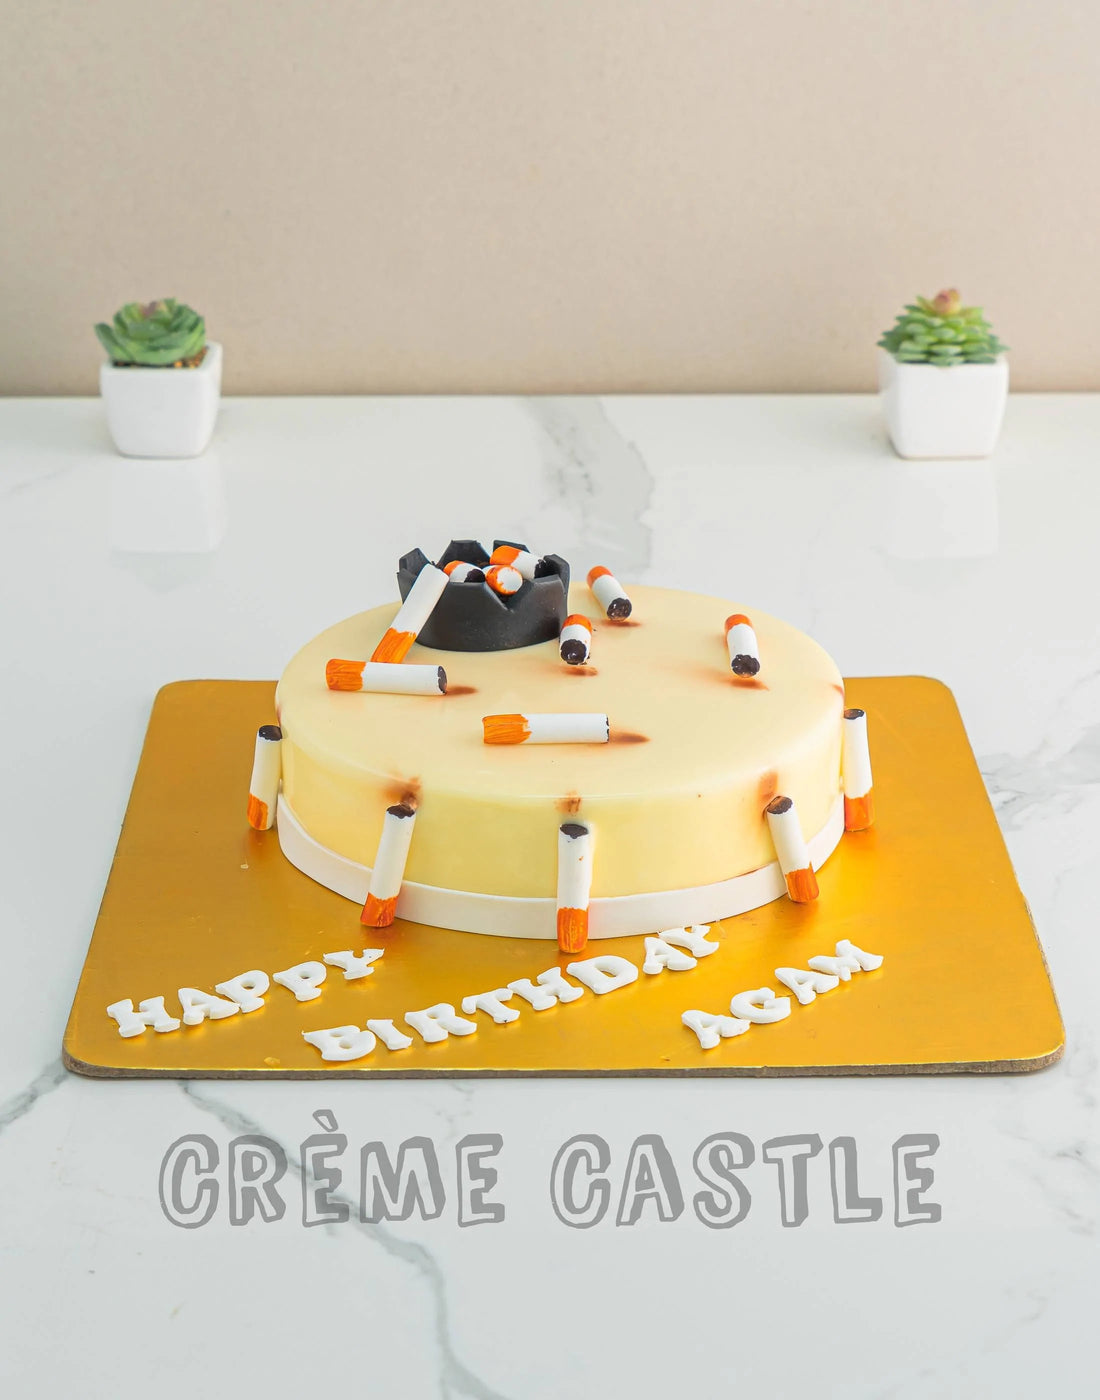 birthday cake for boyfriend ideas